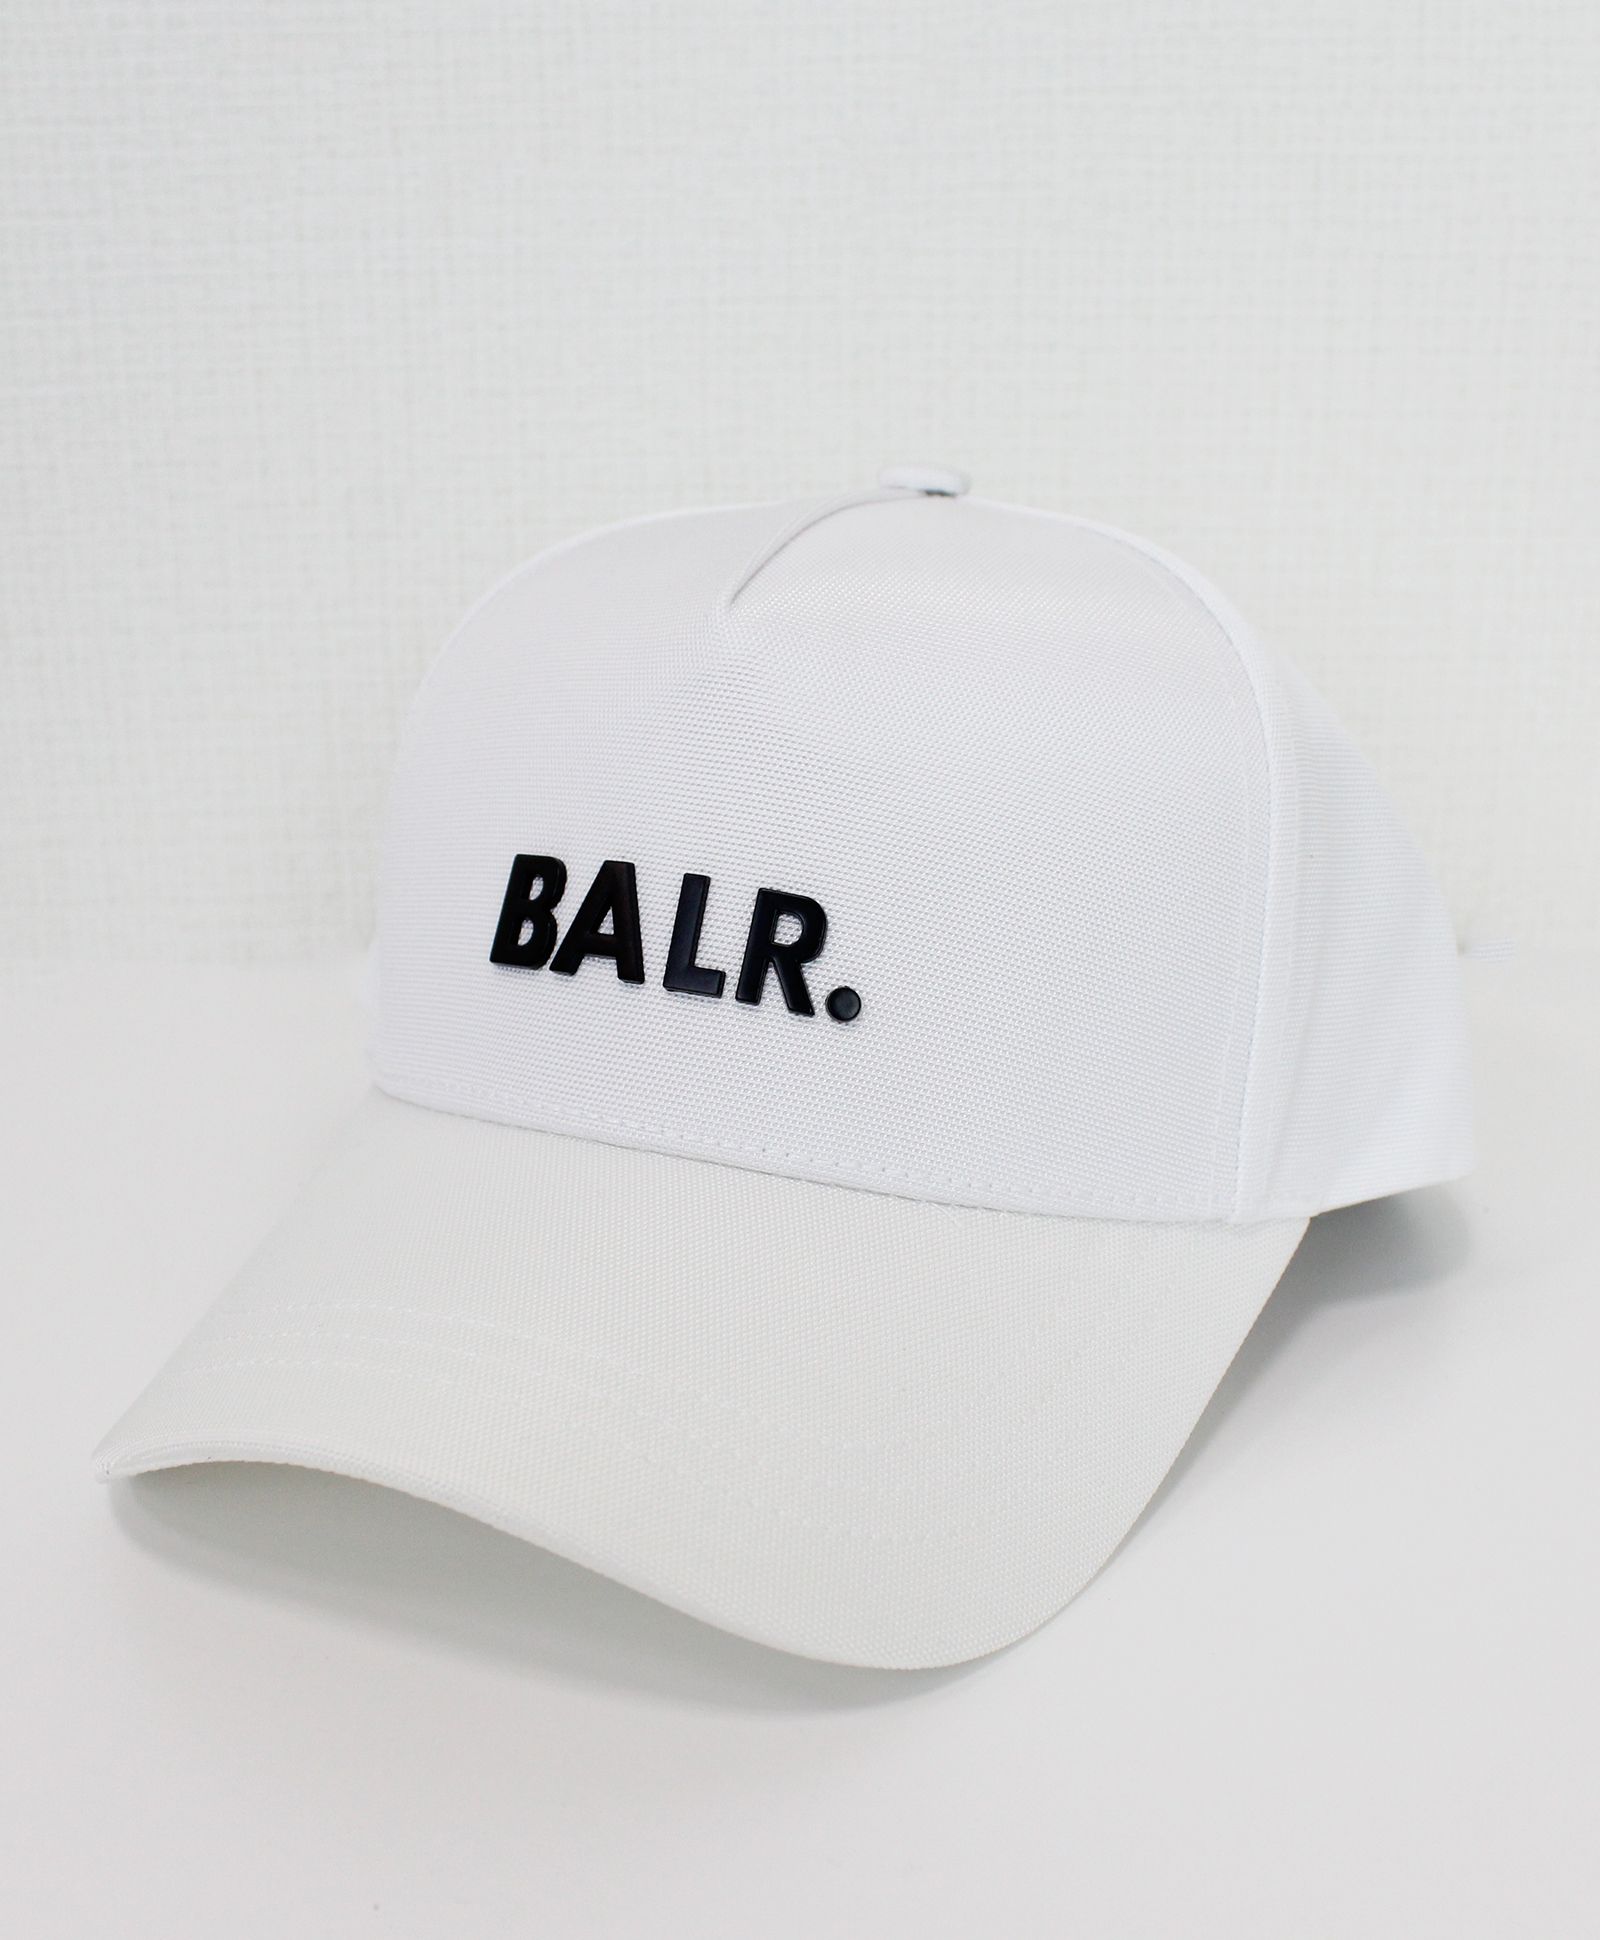 BALR. - ベースボールキャップ / Classic Oxford Cap / White [B10014